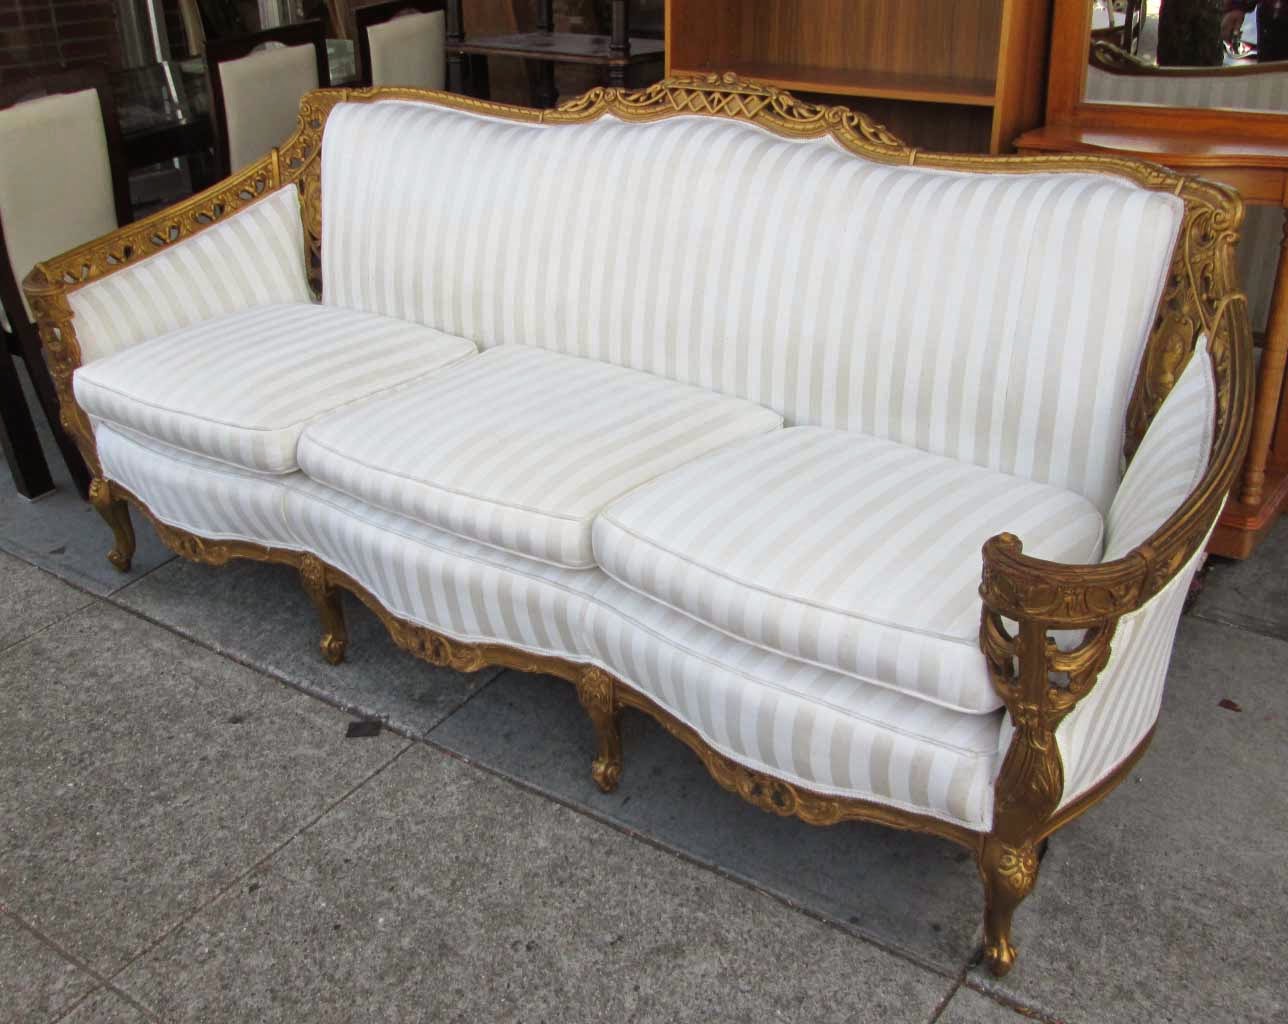 UHURU FURNITURE & COLLECTIBLES: SOLD Louis XIV Style Antique Sofa - $350